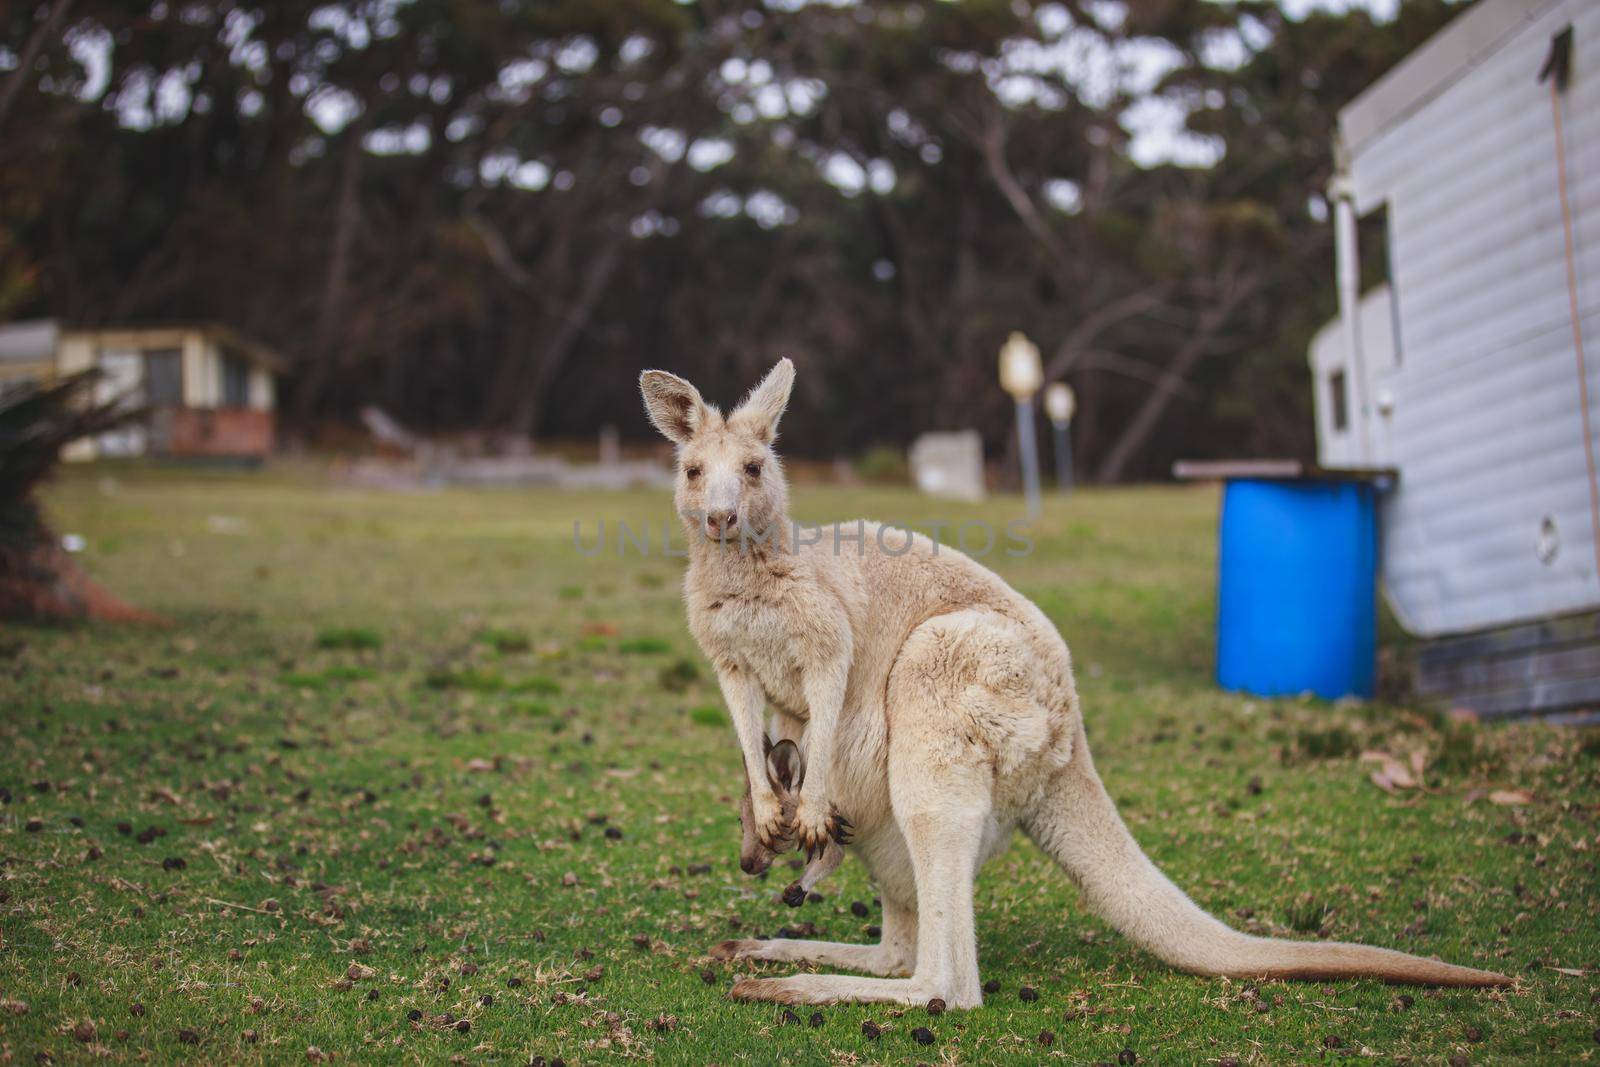 White kangaroo grazing with her joey, Australia . High quality photo